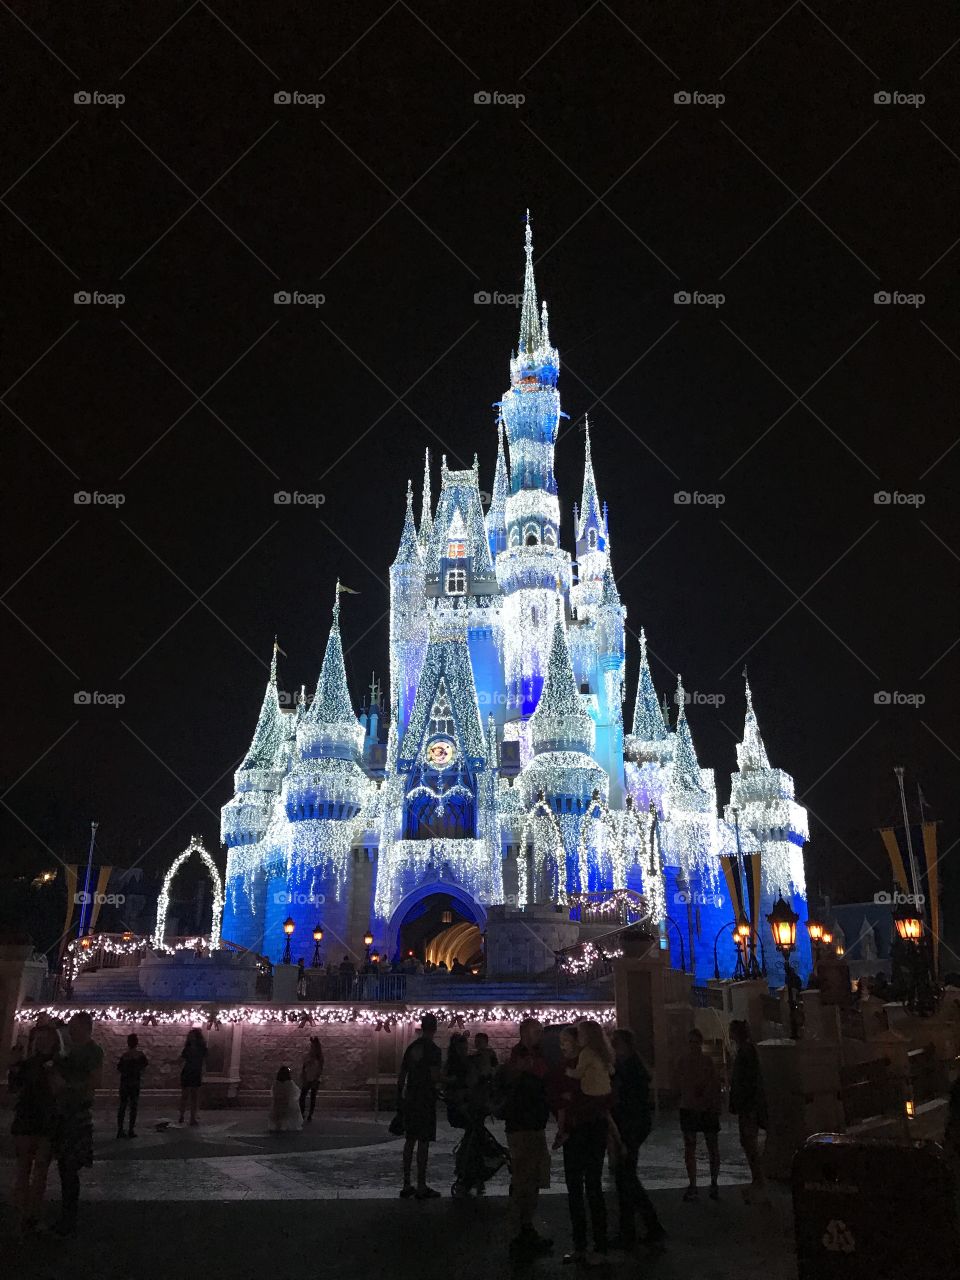 Winter wonderland DisneyWorld Castle, Cinderella’s Castle. January 2019